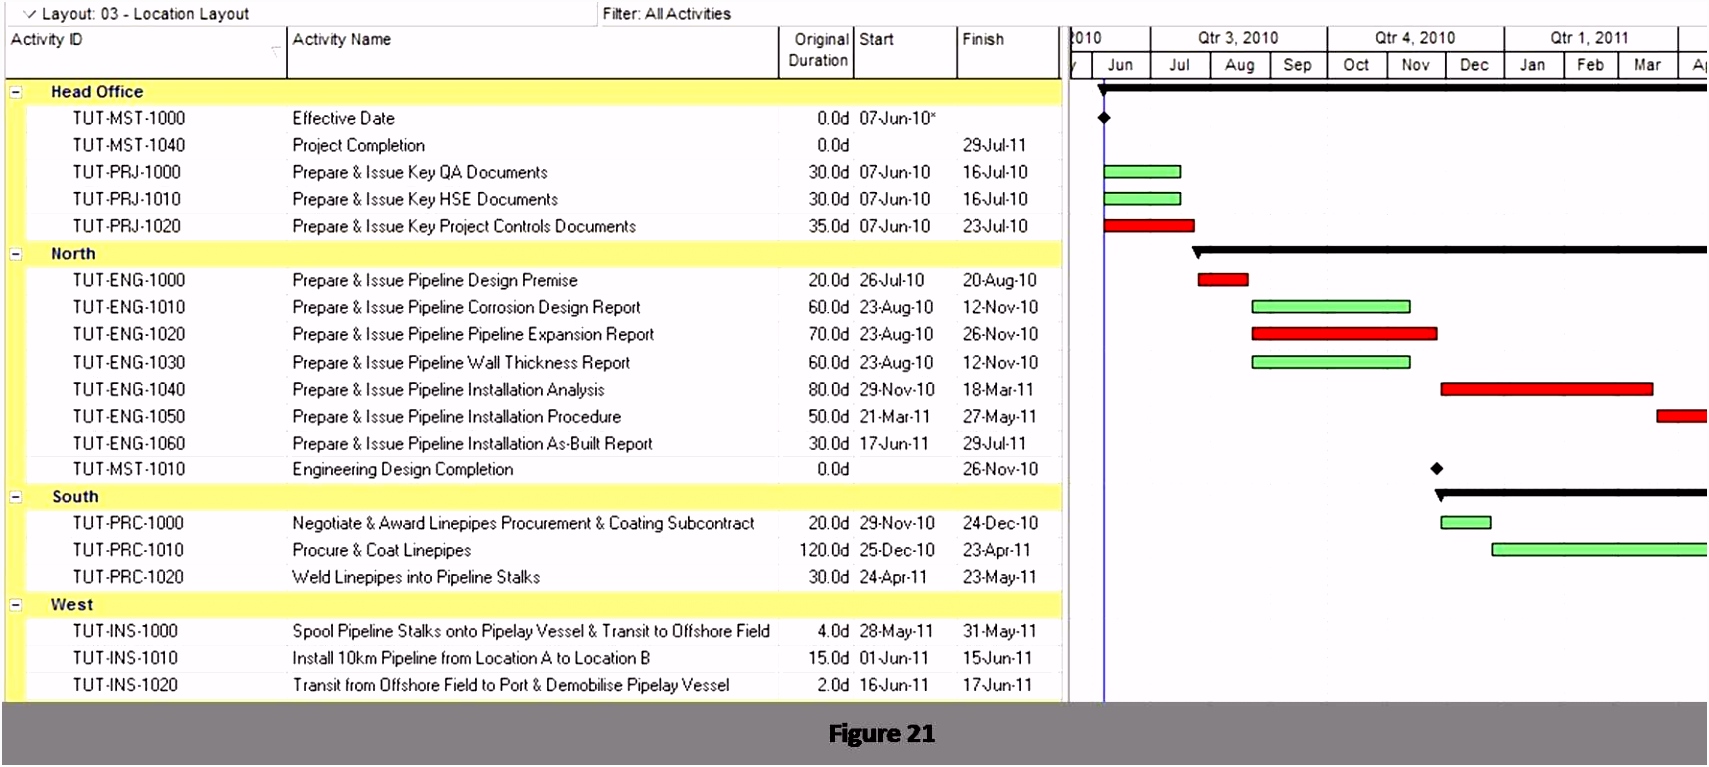 Budgetplanung Excel Vorlage Kostenlos 16 Genial Dienstplan Vorlage Excel Foto I8ol29ofr5 I5rymun4h2